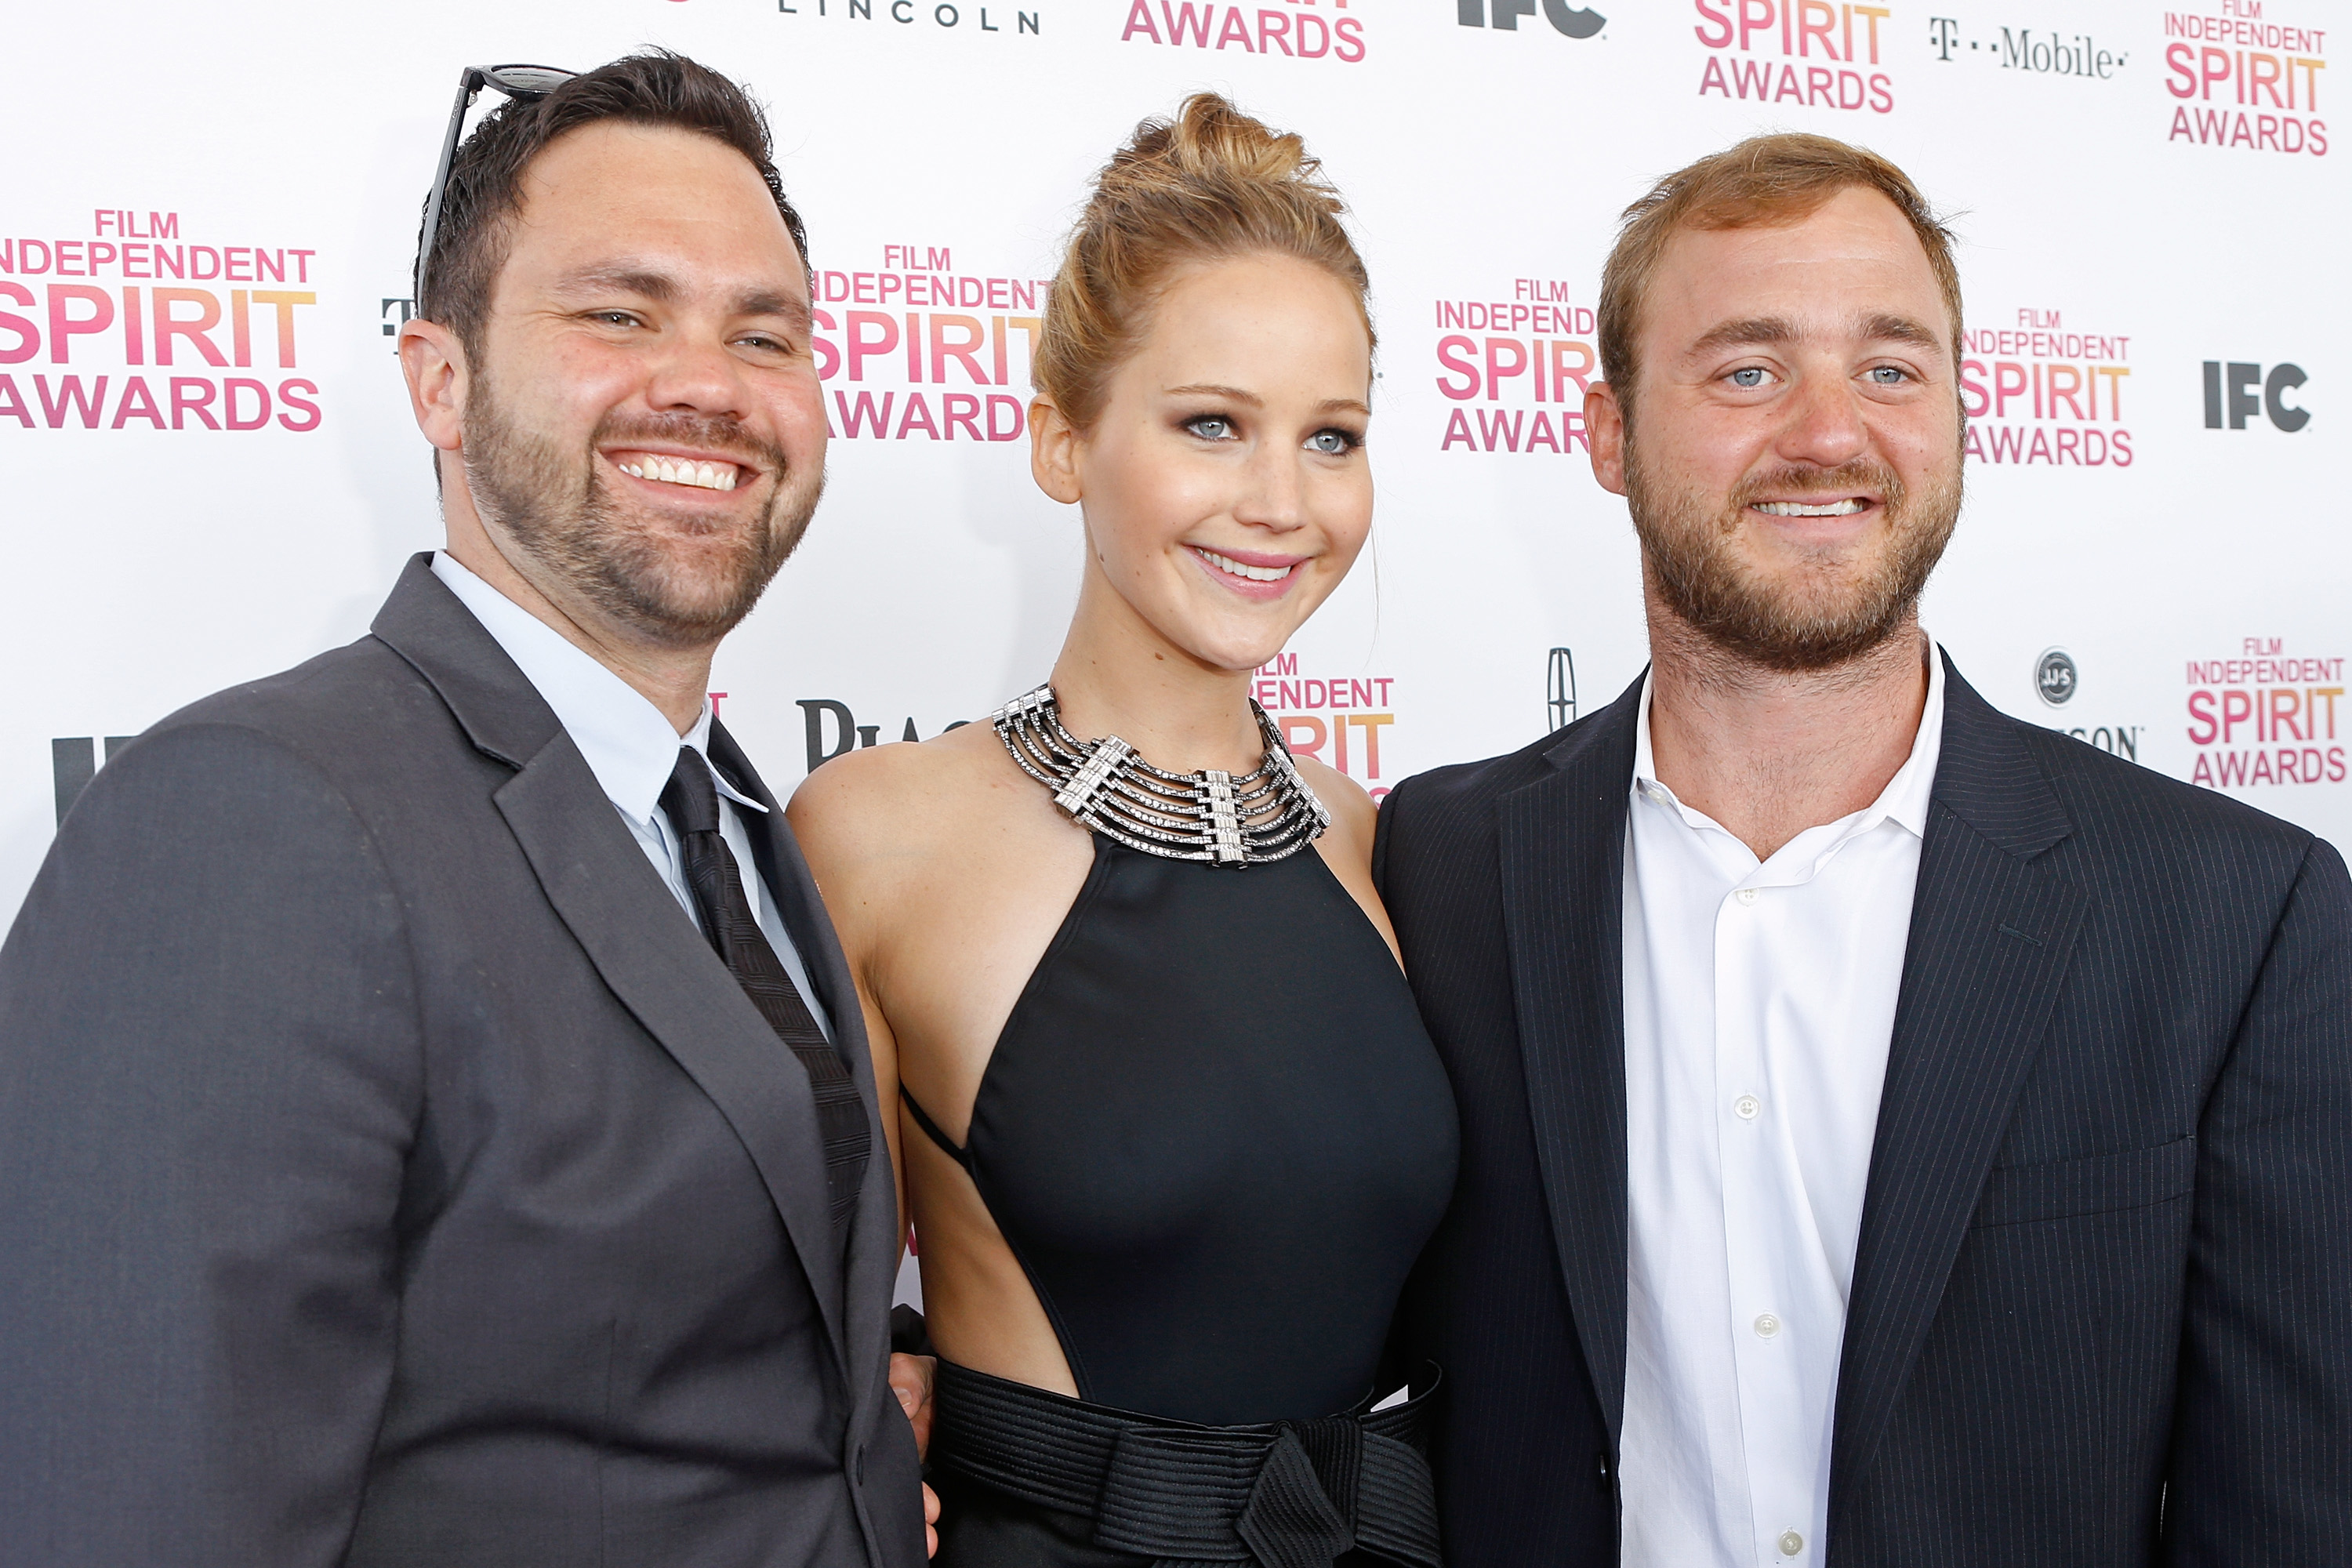 Jennifer Lawrence y sus hermanos en los Film Independent Spirit Awards 2013 en Santa Mónica, California. | Foto: Getty Images